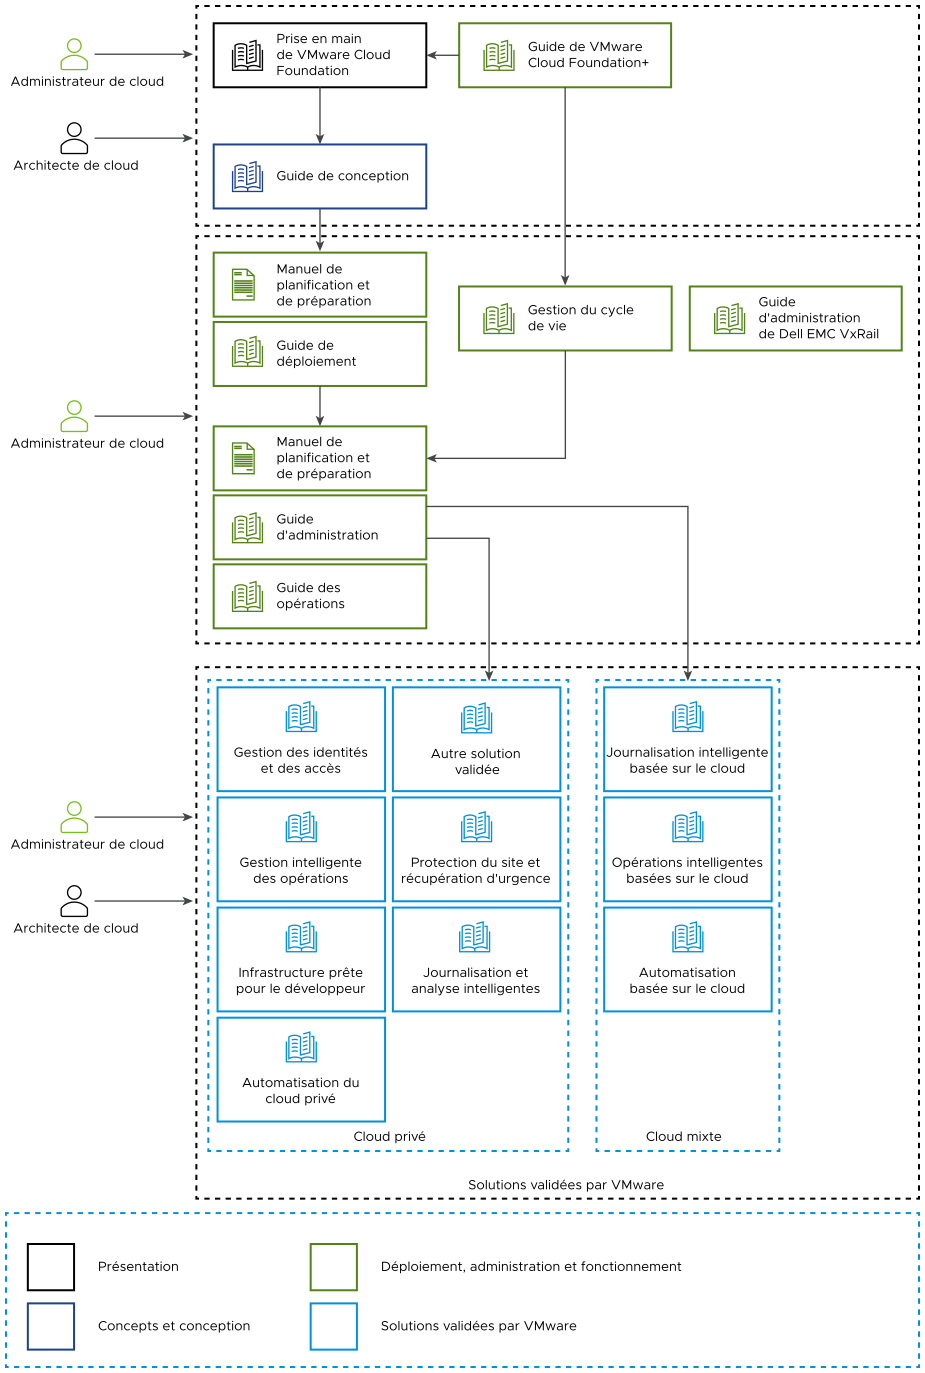 Plan de la documentation de VMware Cloud Foundation